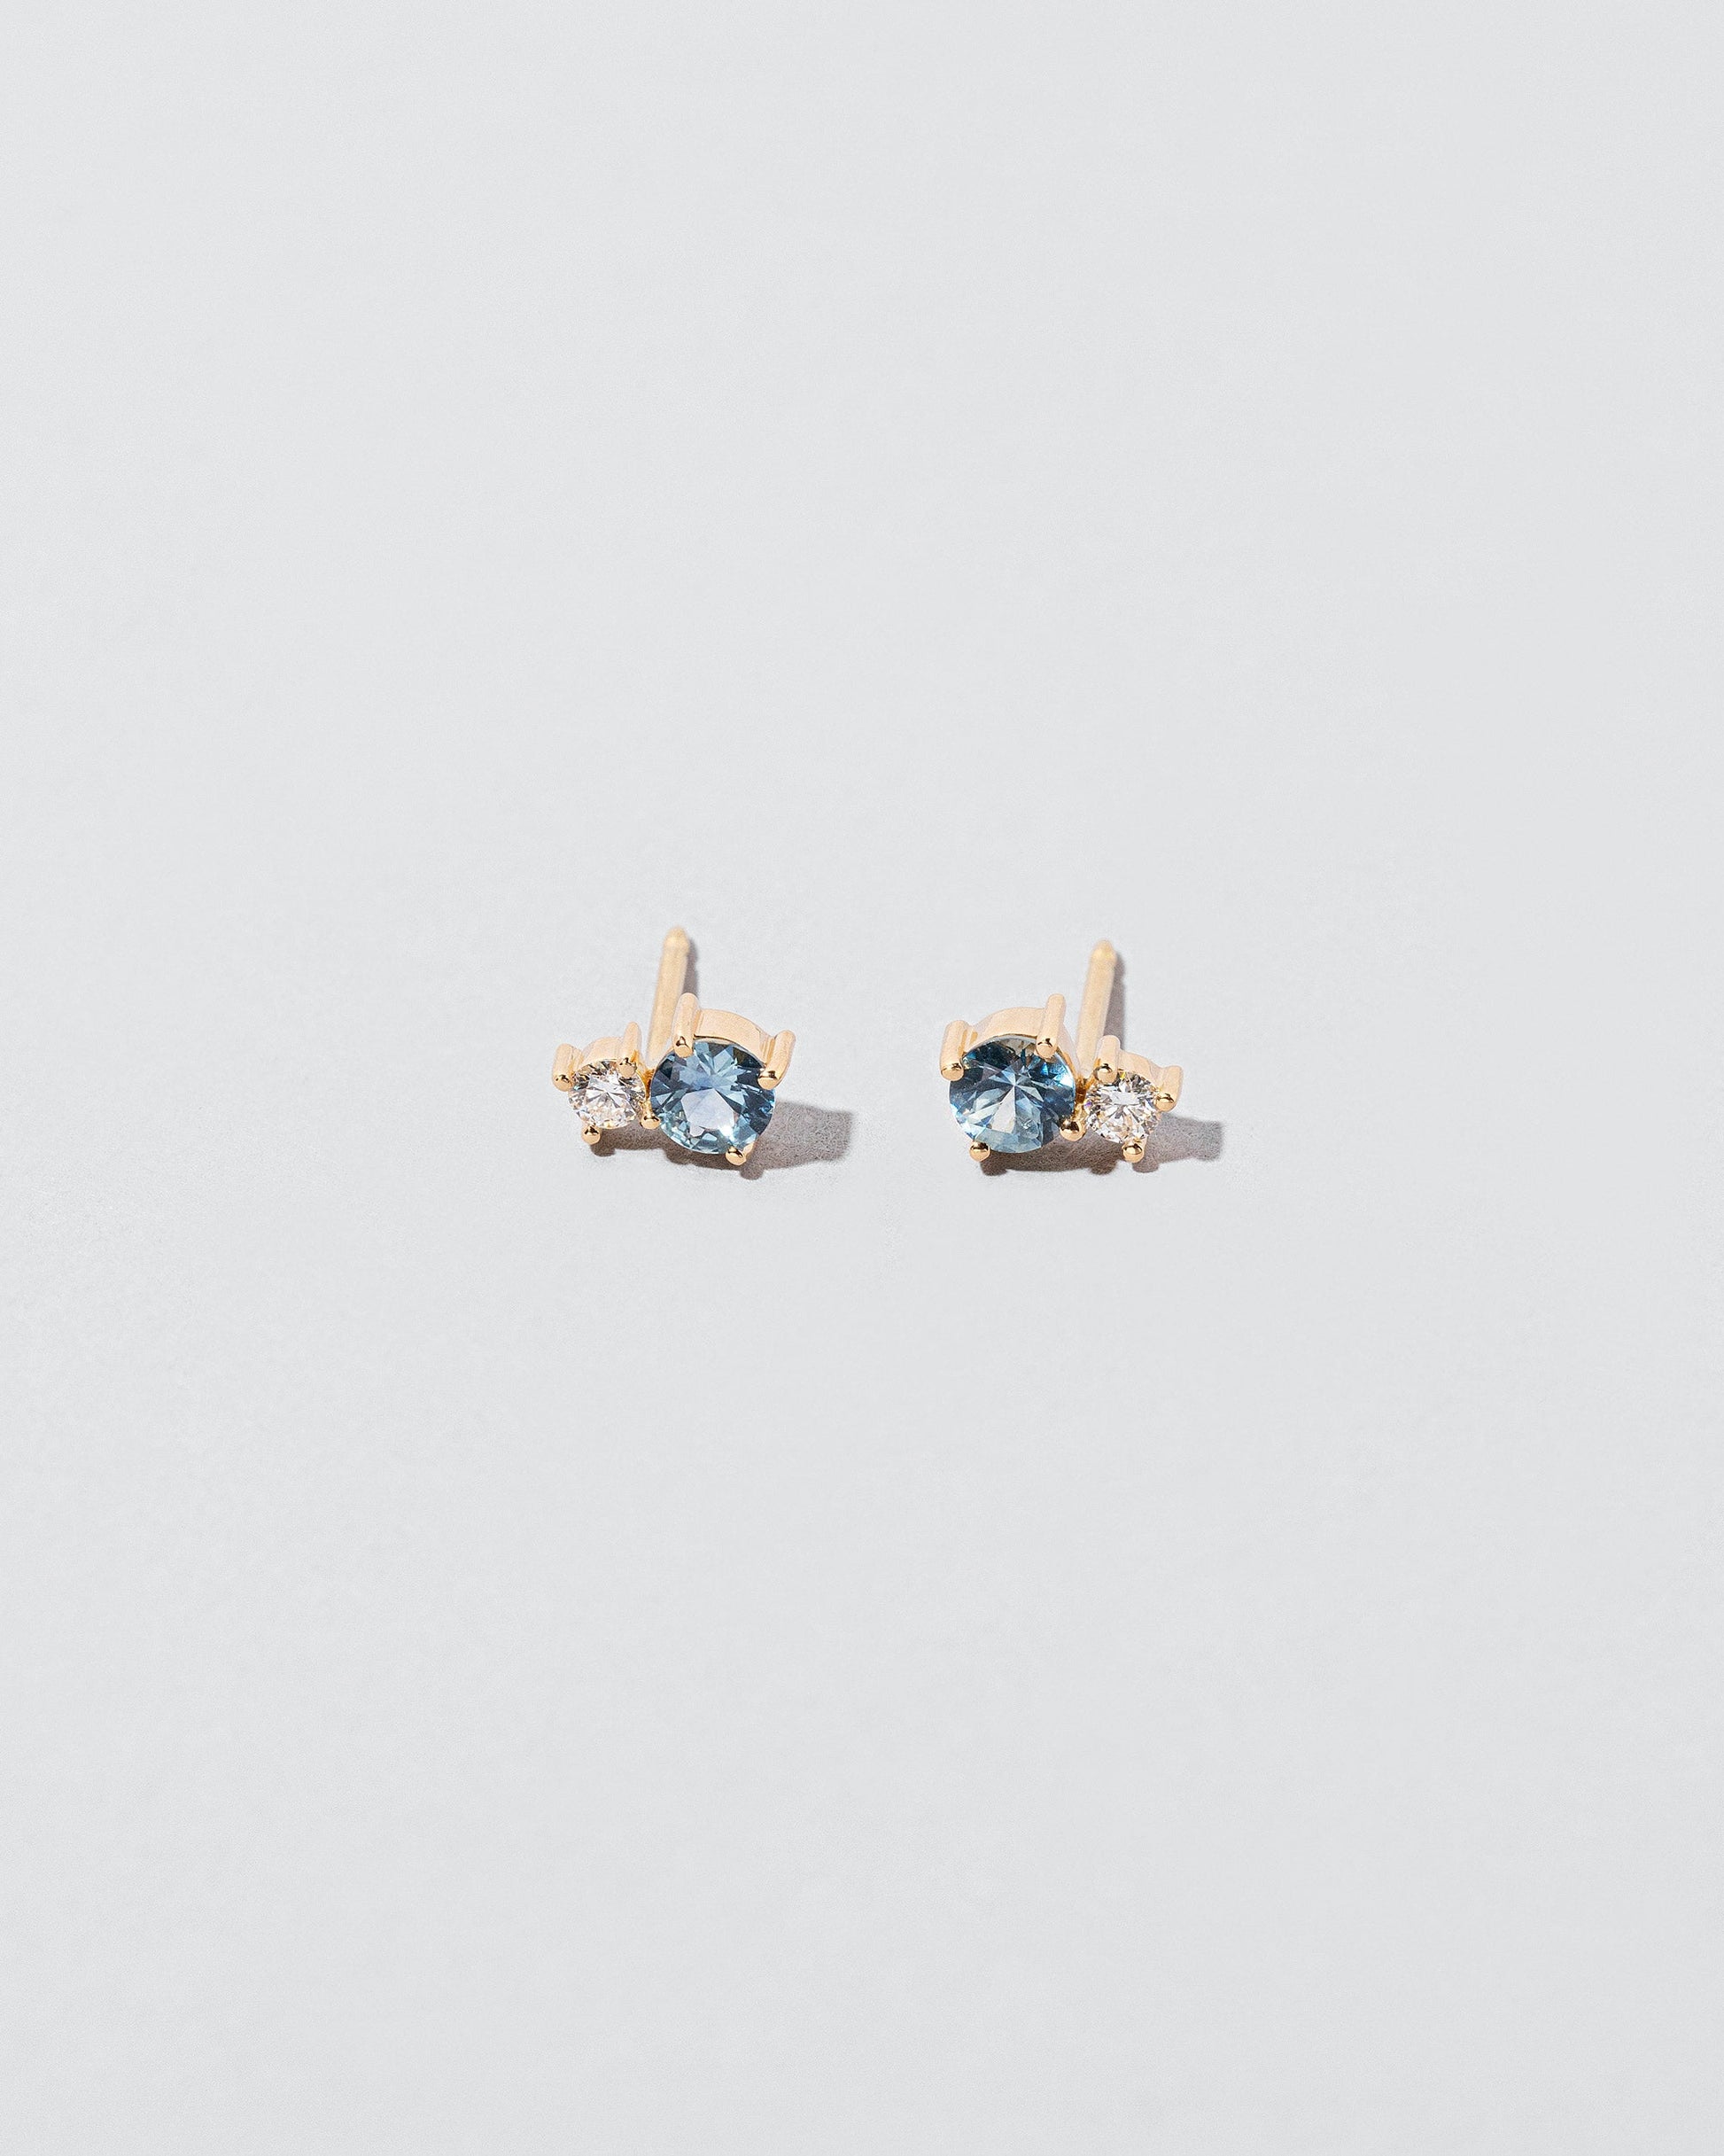  Aster Earrings on light color background.